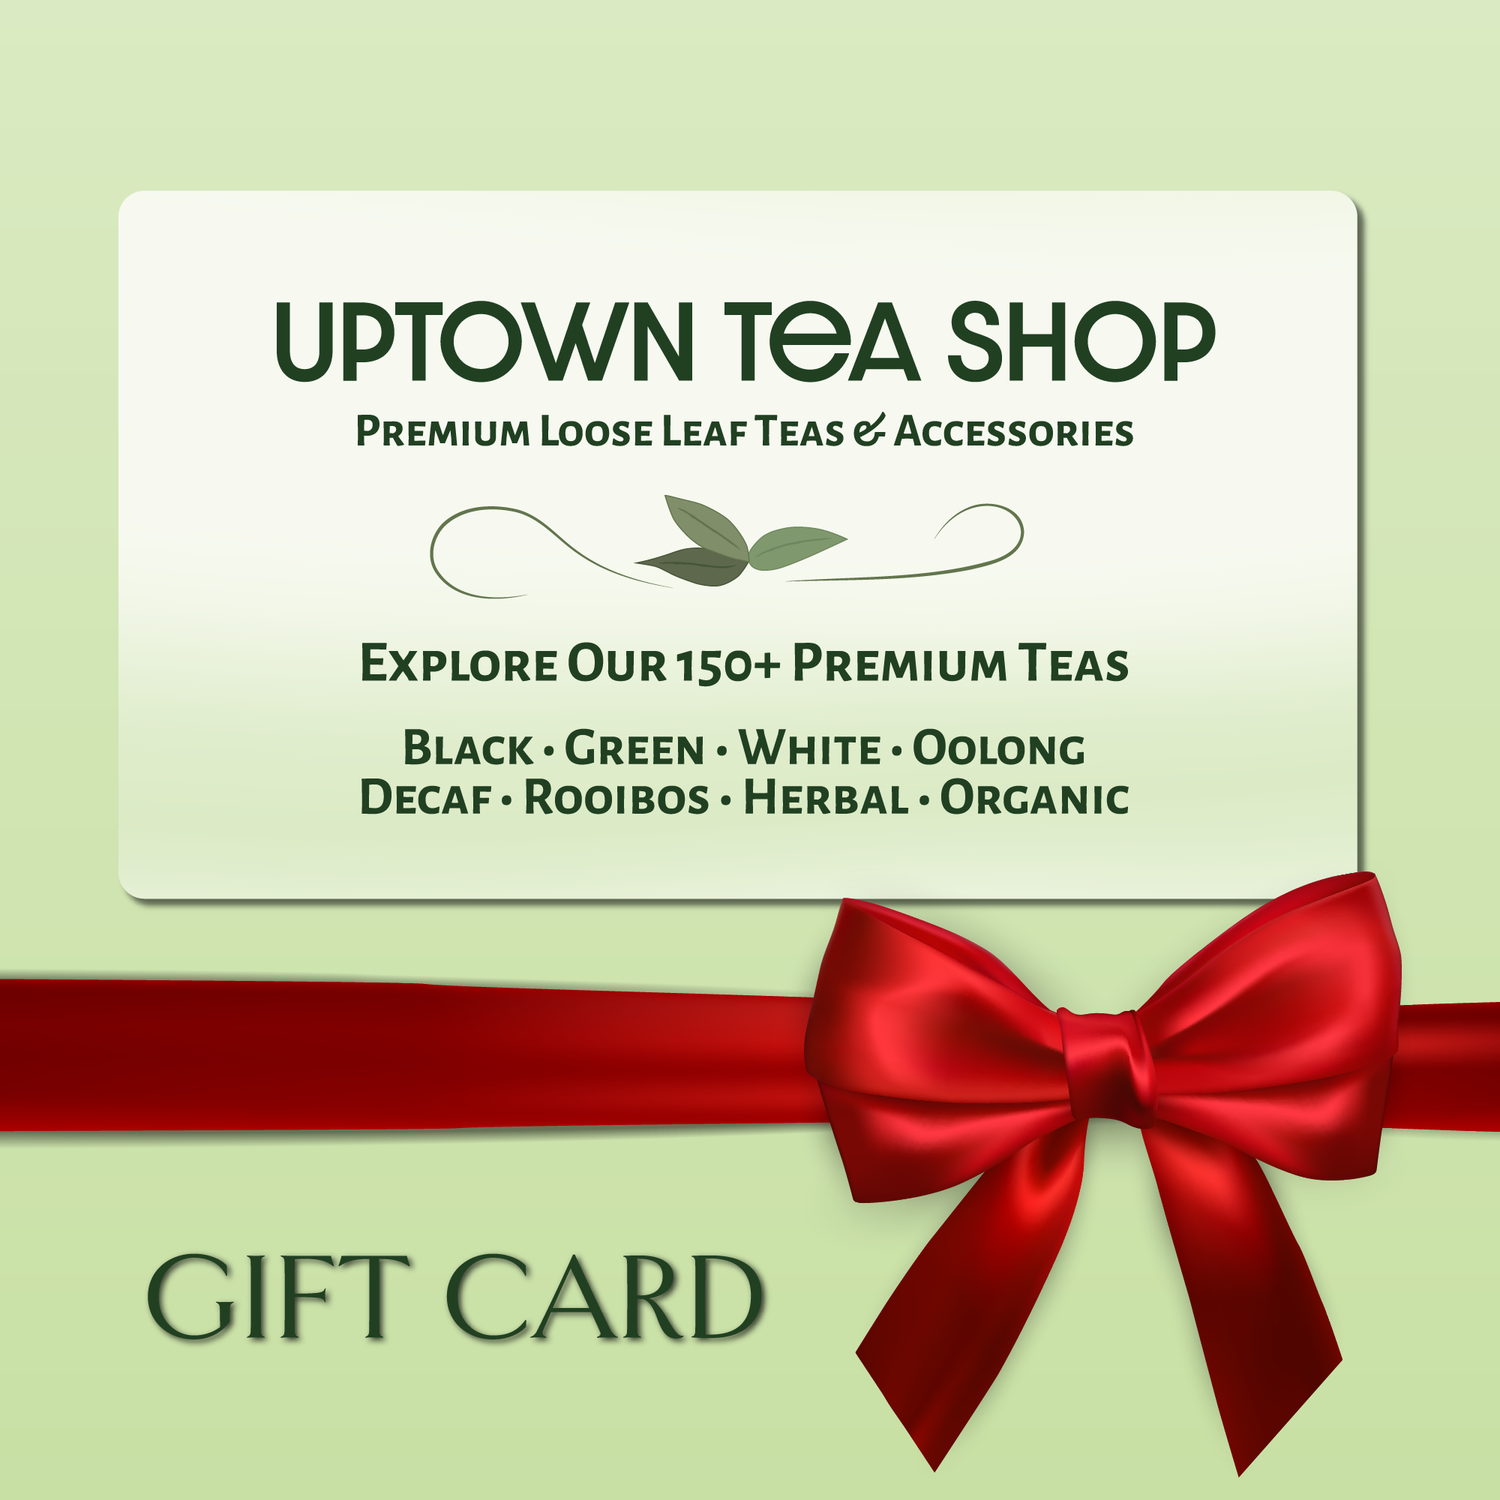 Uptown Tea Shop Gift Card -$25